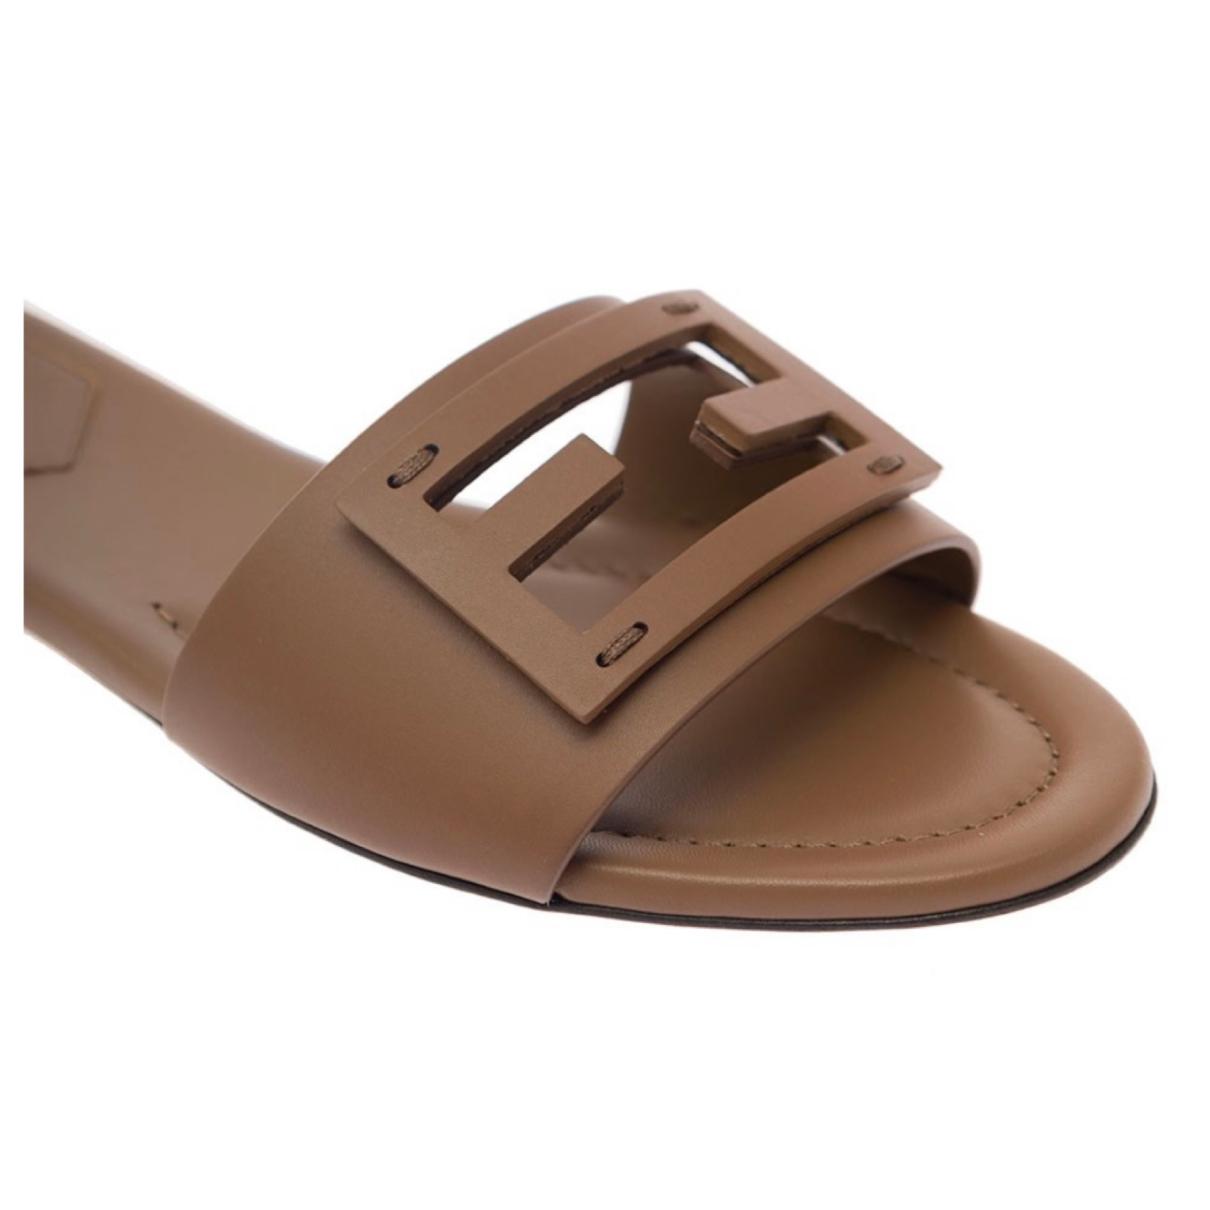 Leather sandal - 4